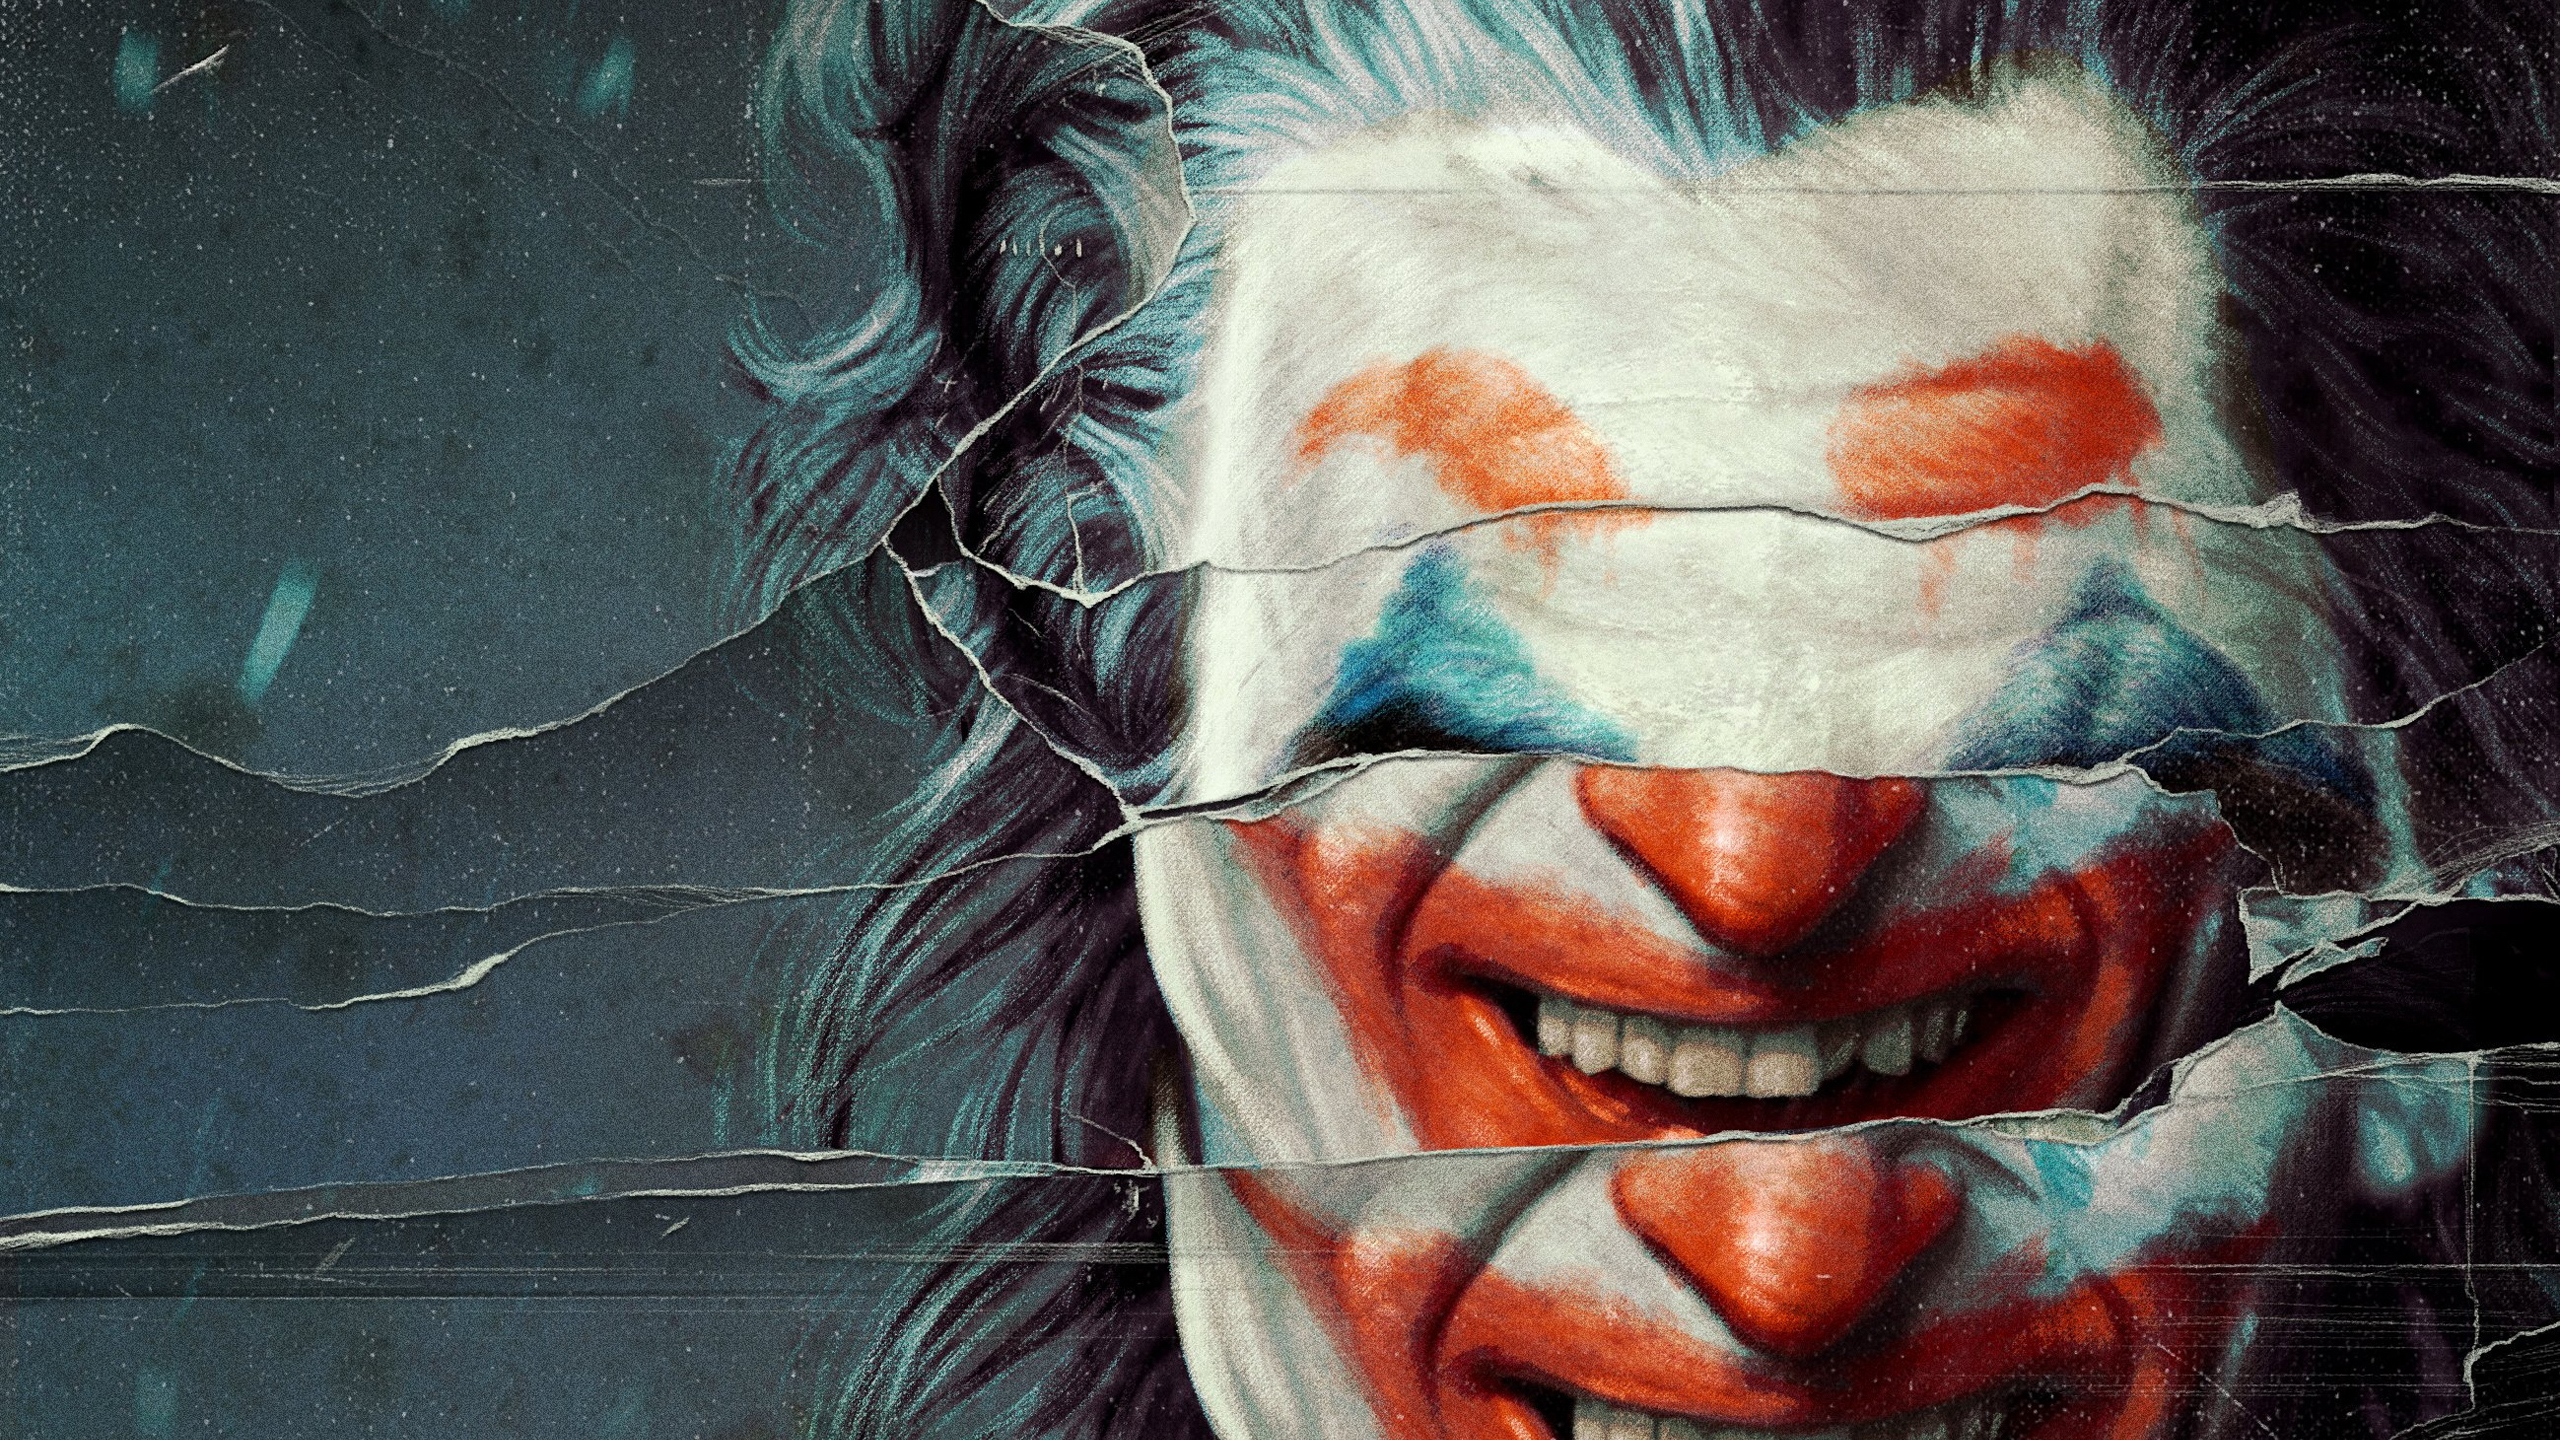 Face Of Joker Joaquin Phoenix Reflecting On Broken Mirror Without Eyes 2K Joker